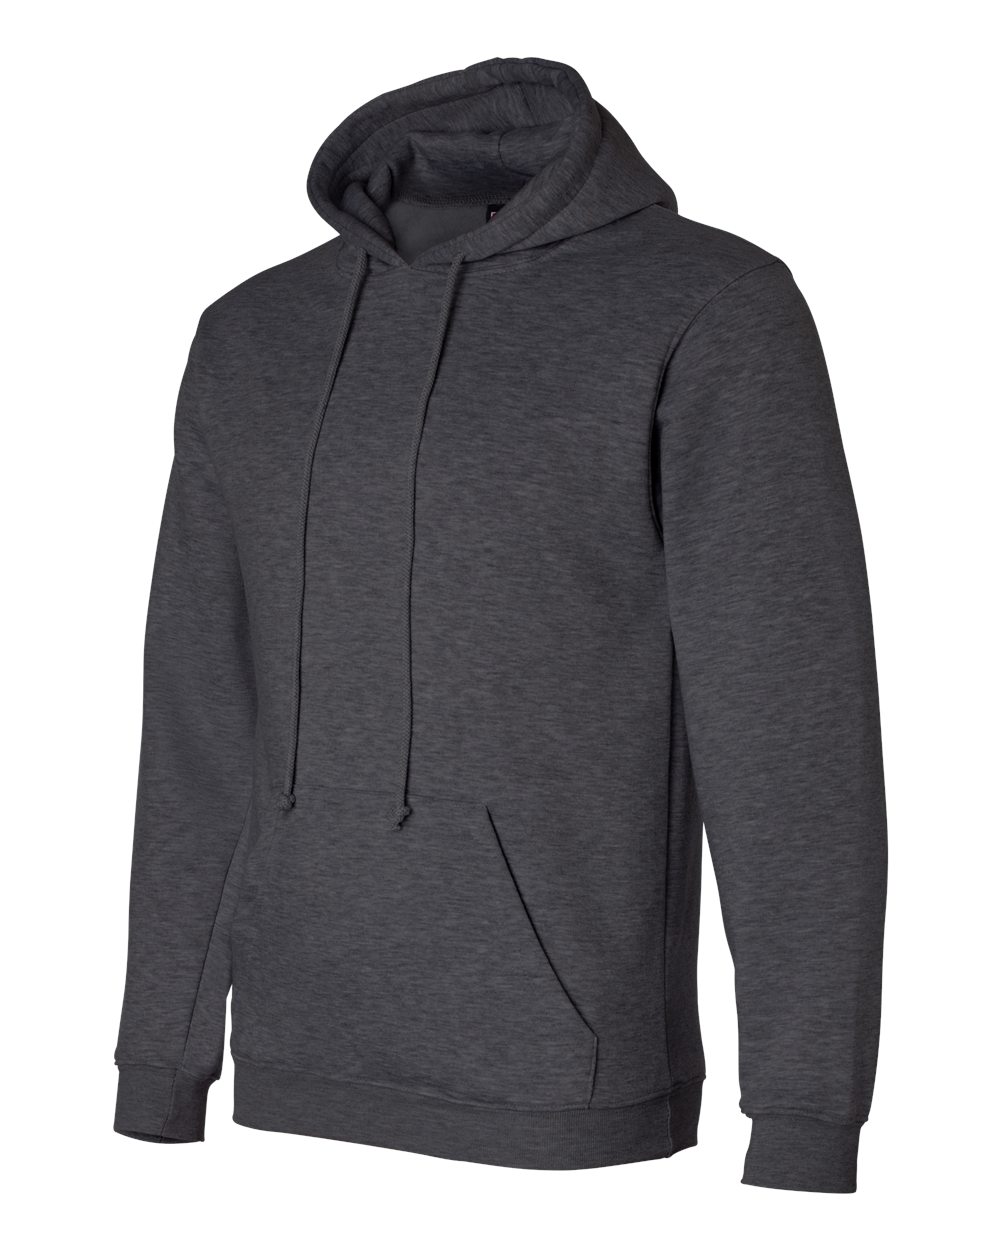 Bayside Full-Zip Hooded Sweatshirt USA Made - SHIRT PRINTING 4U